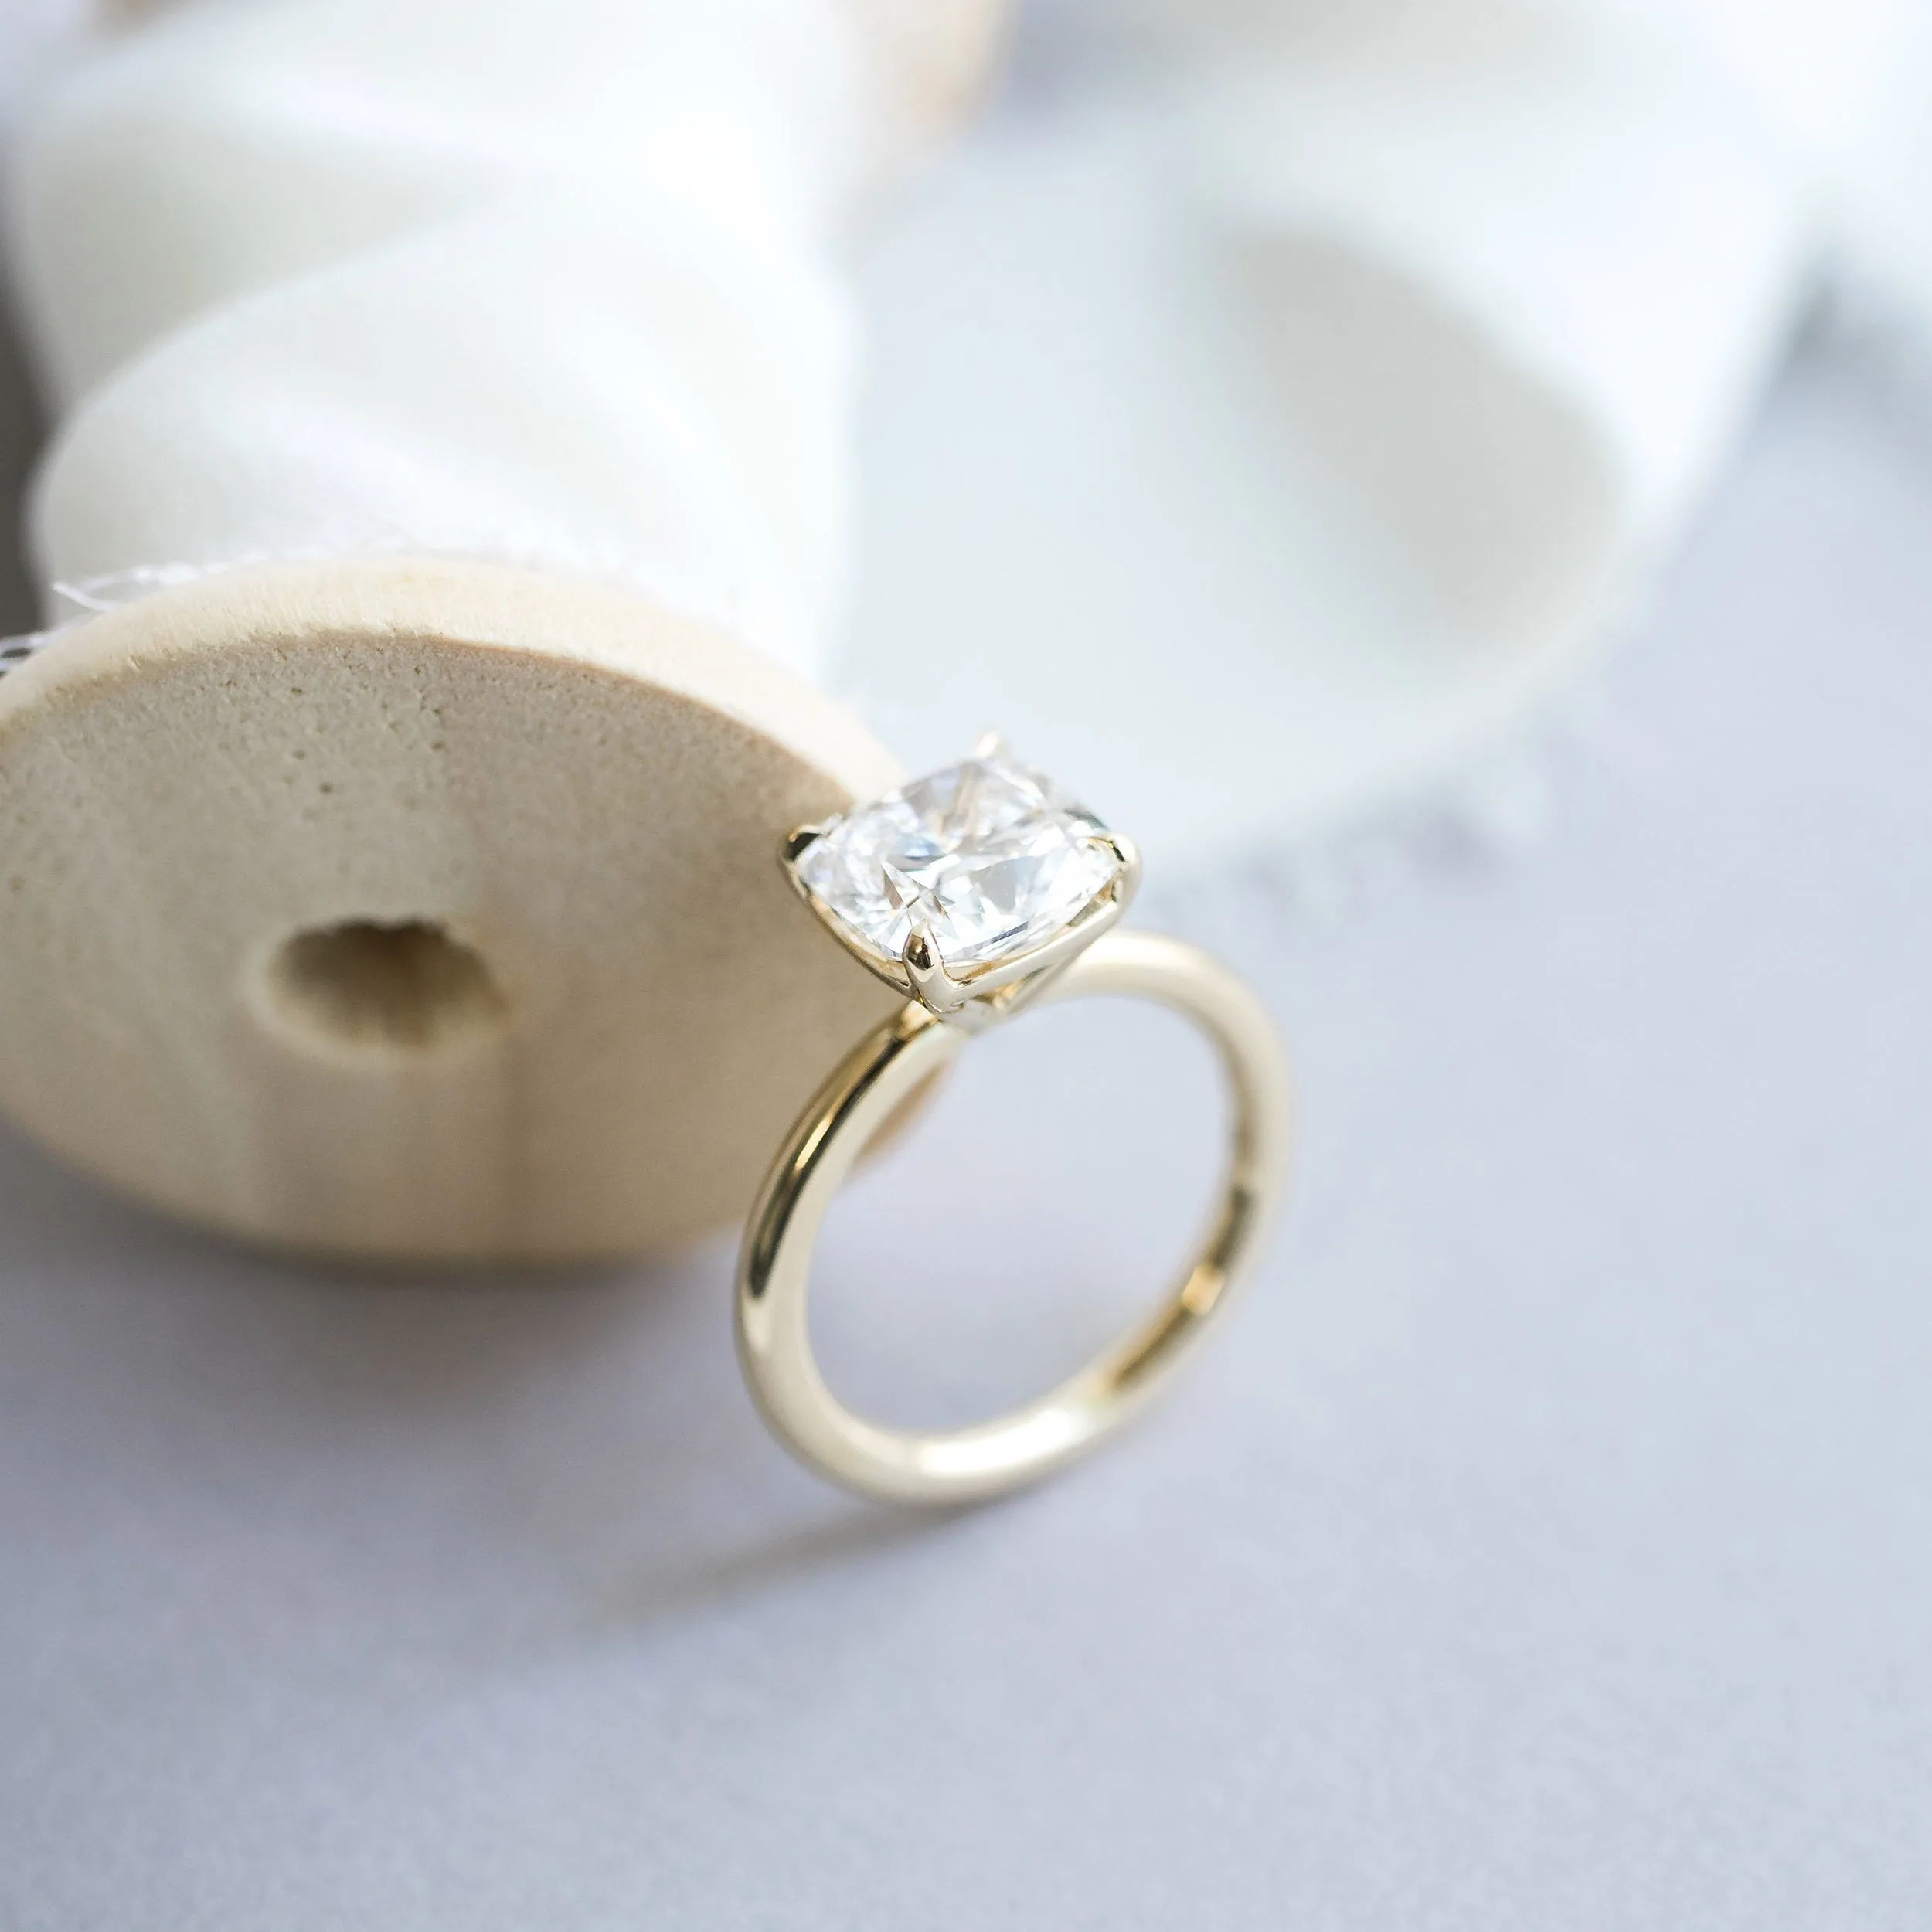 14k yellow gold 2.5ct cushion cut lab diamond solitaire engagement ring ada diamonds design ad 221 profile